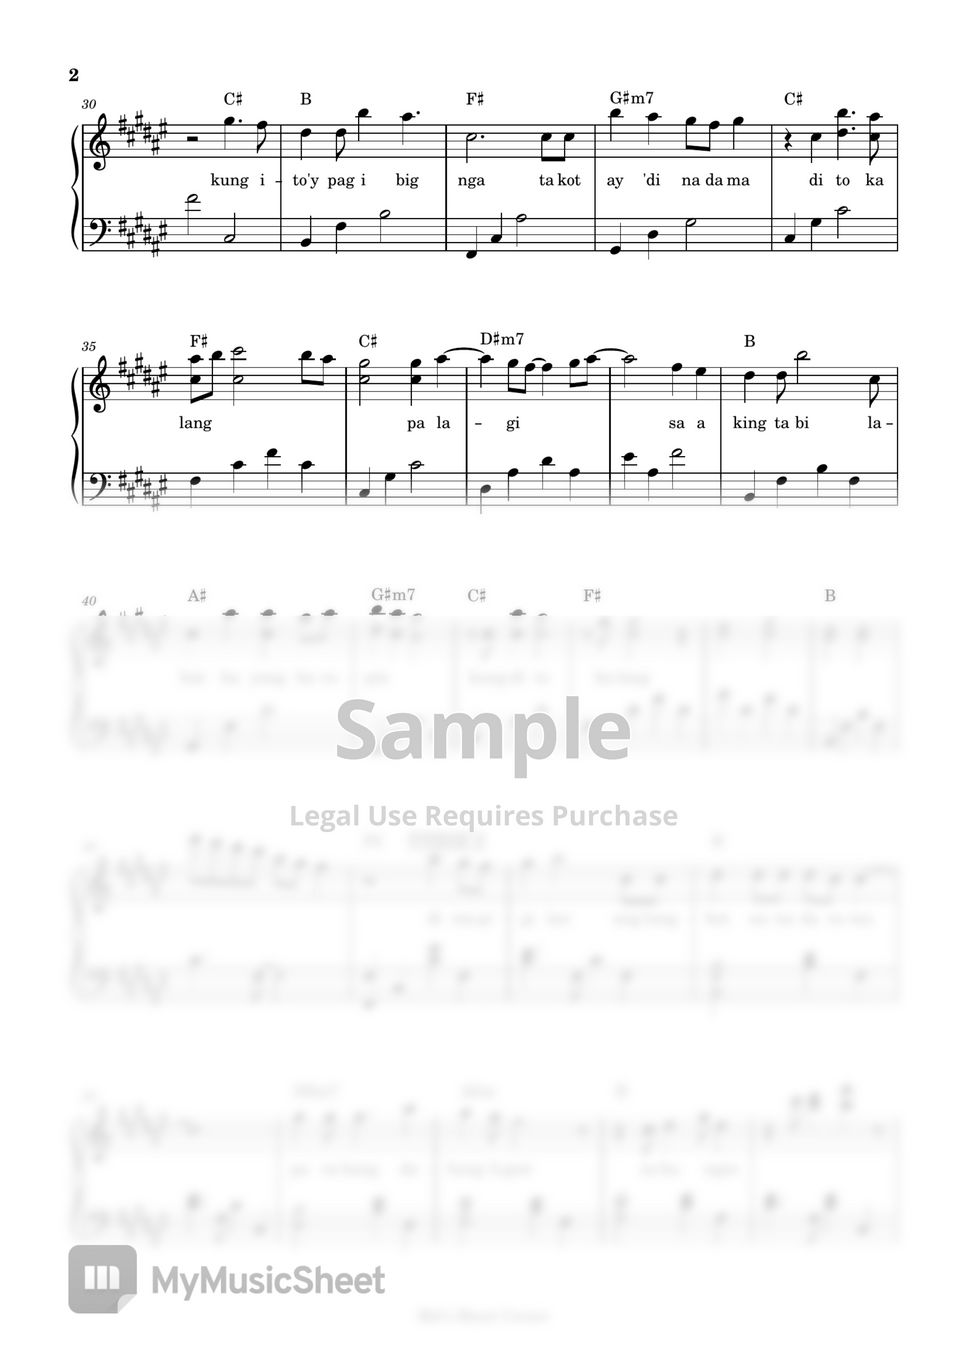 Moira dela Torre - Dito Ka Lang piano sheet music by Mel's Music Corner